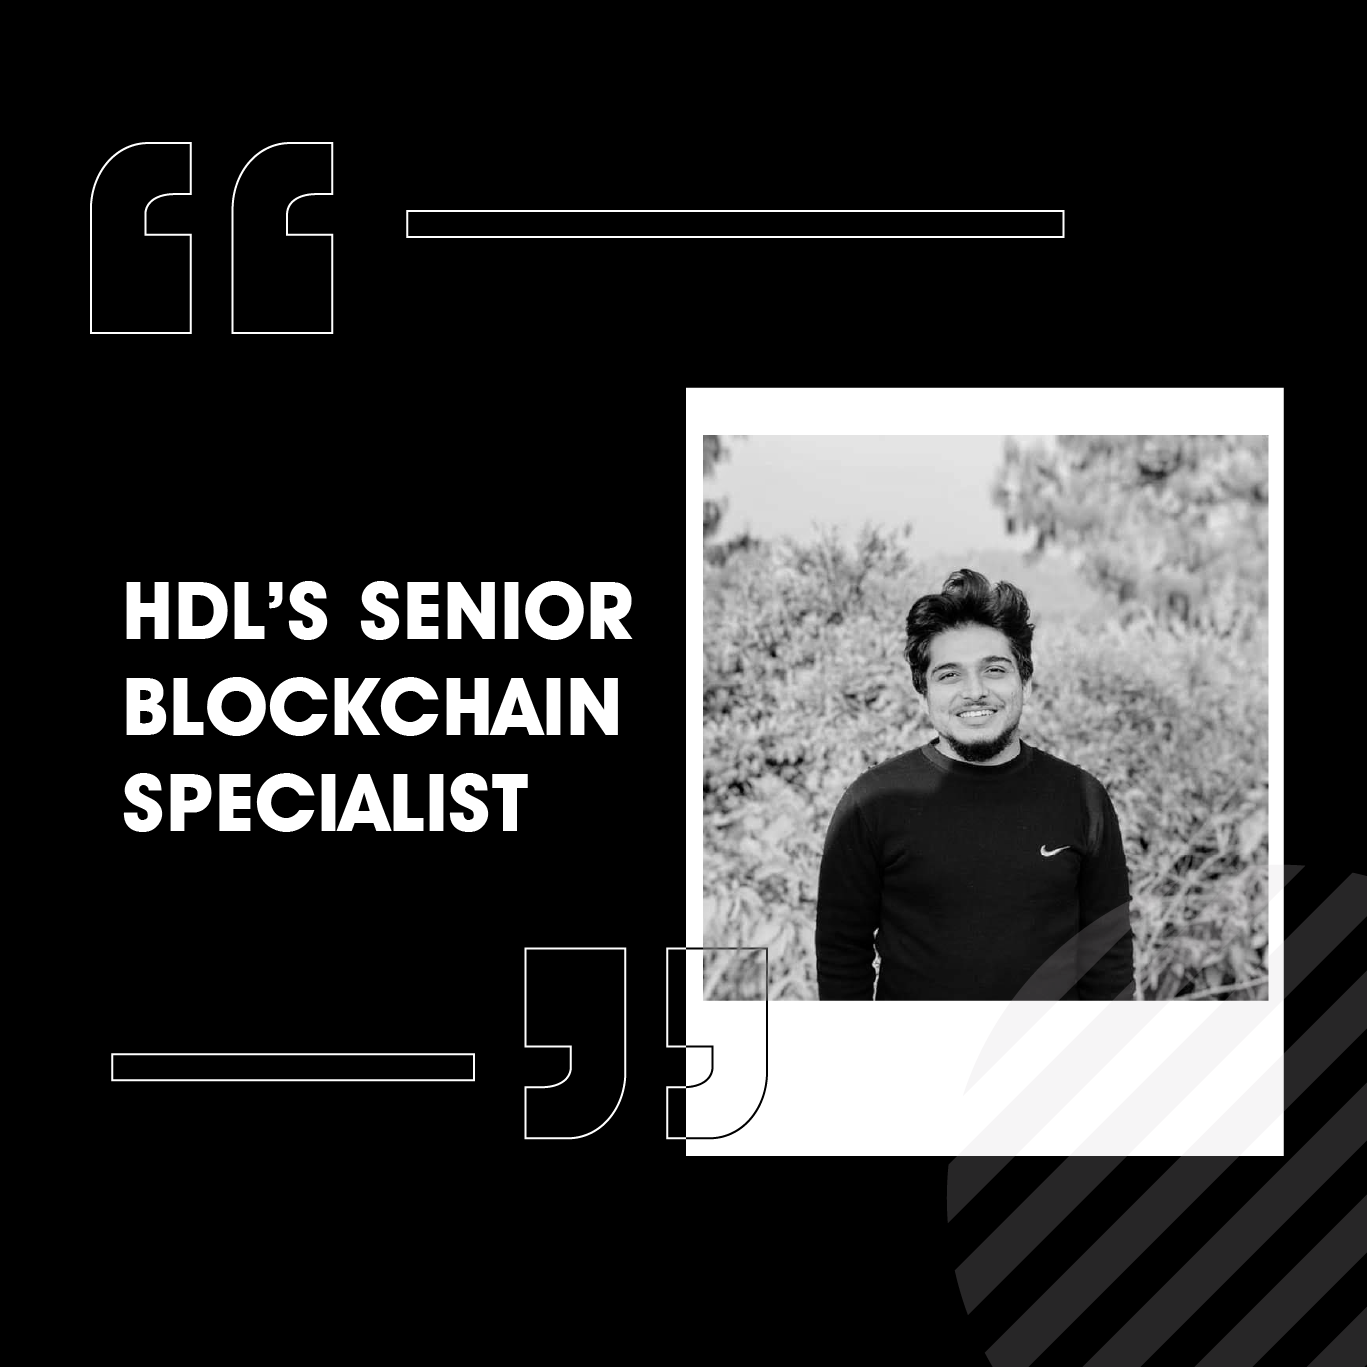 HDL’s Senior Blockchain Specialist